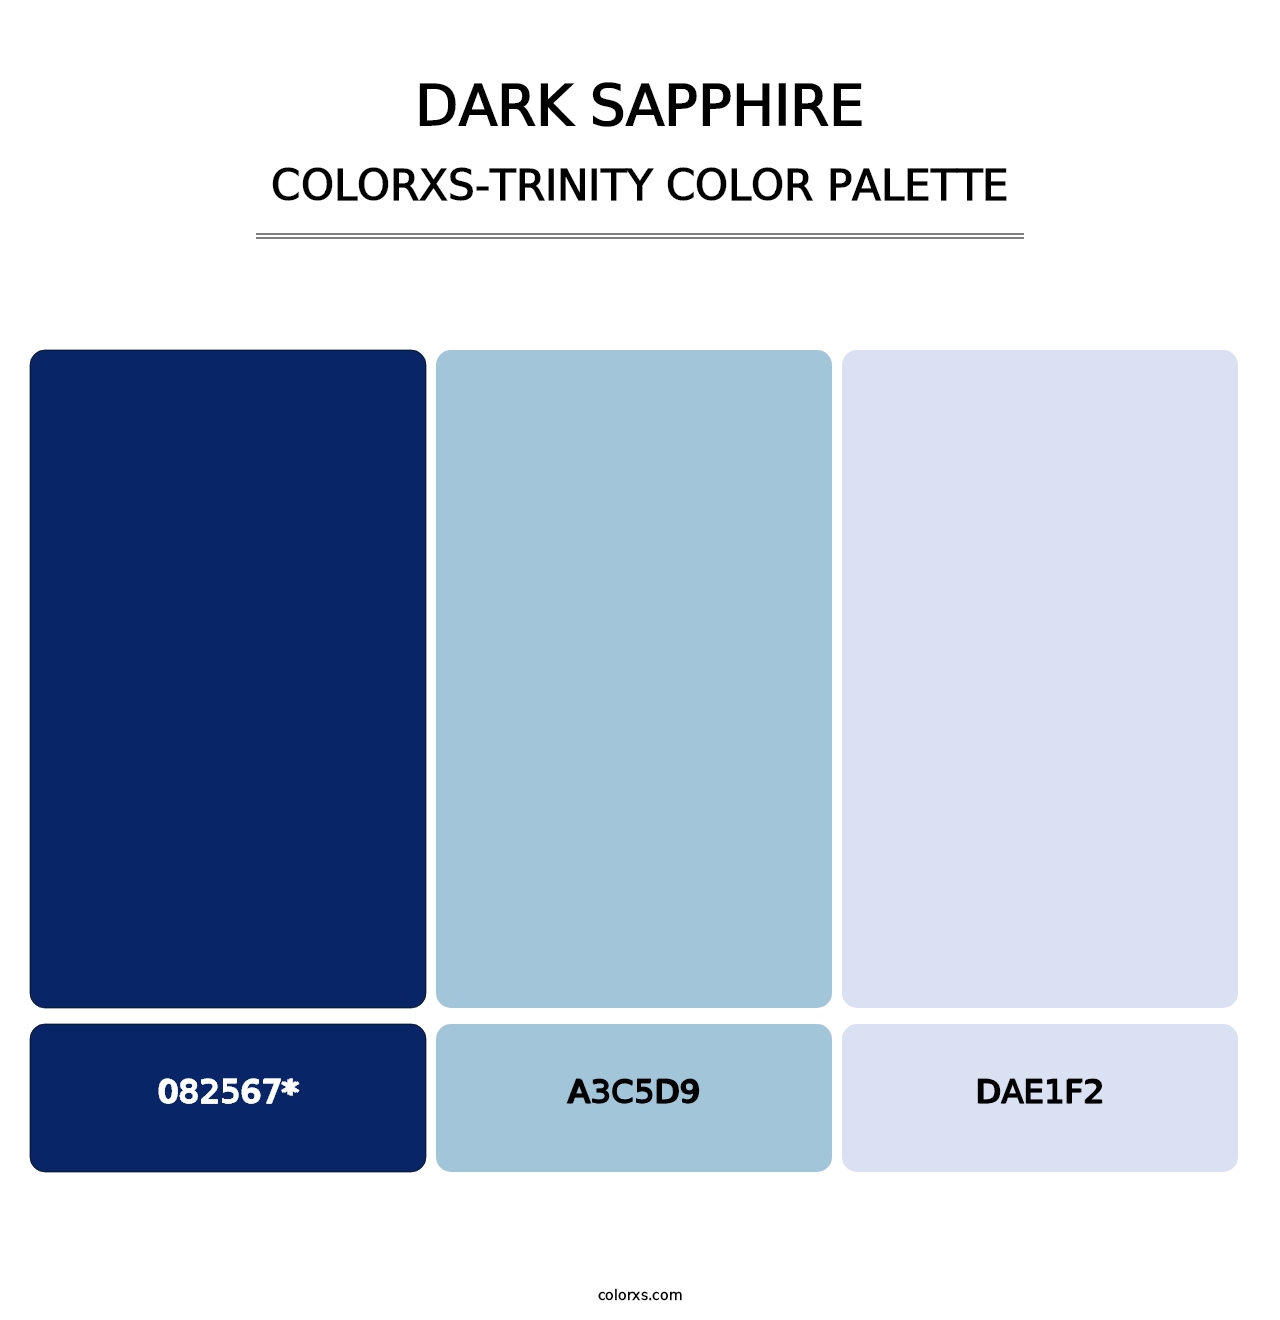 Dark Sapphire - Colorxs Trinity Palette